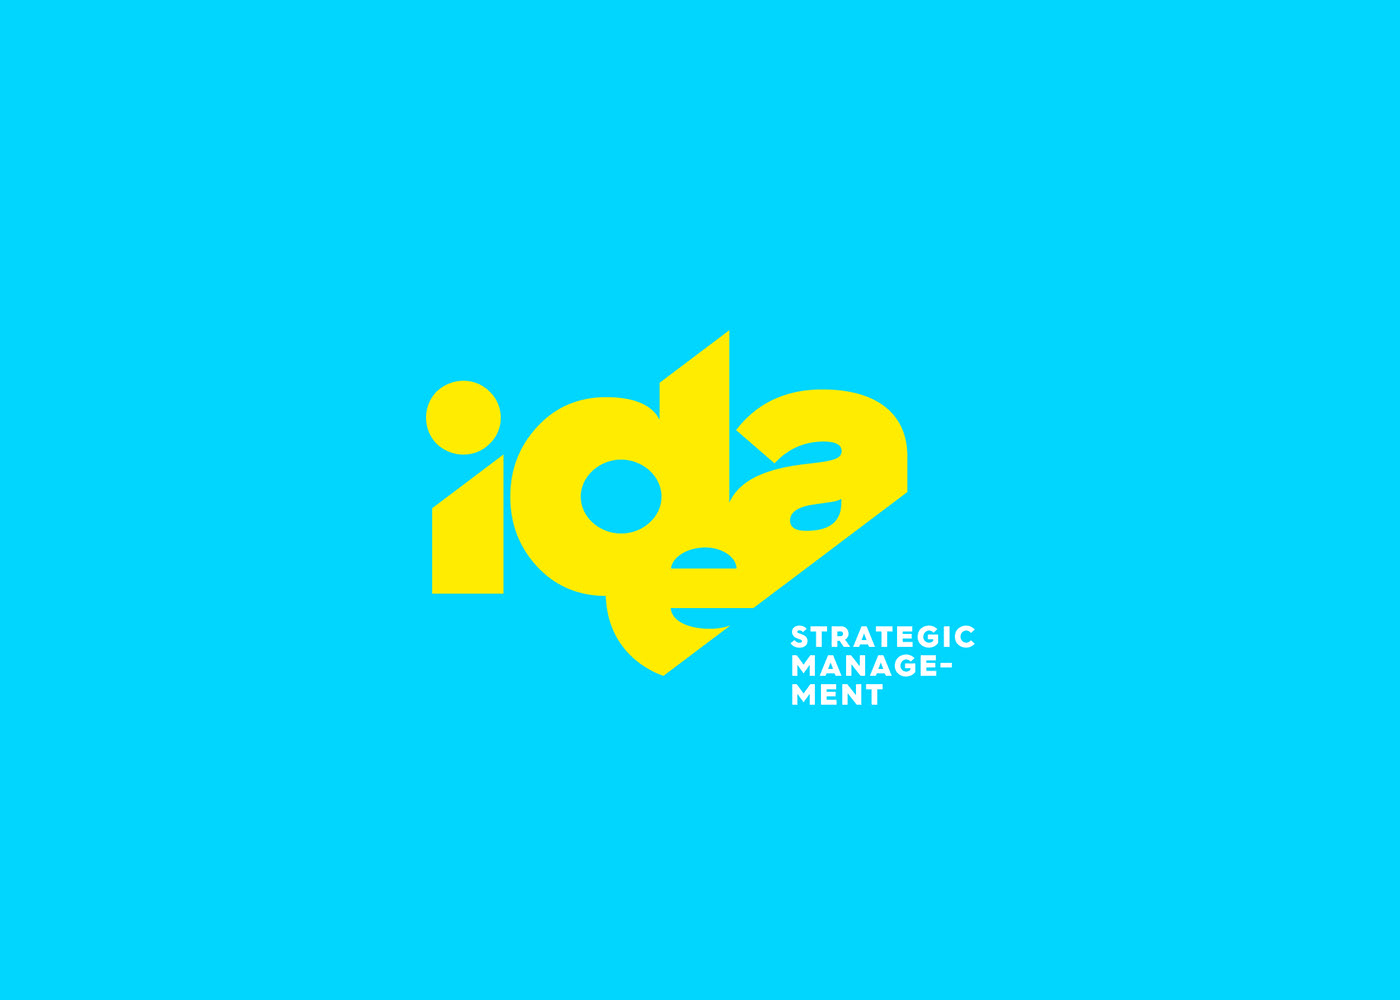 idea idea management  Idea Strategic Management Logo Design Corporate Identity branding 